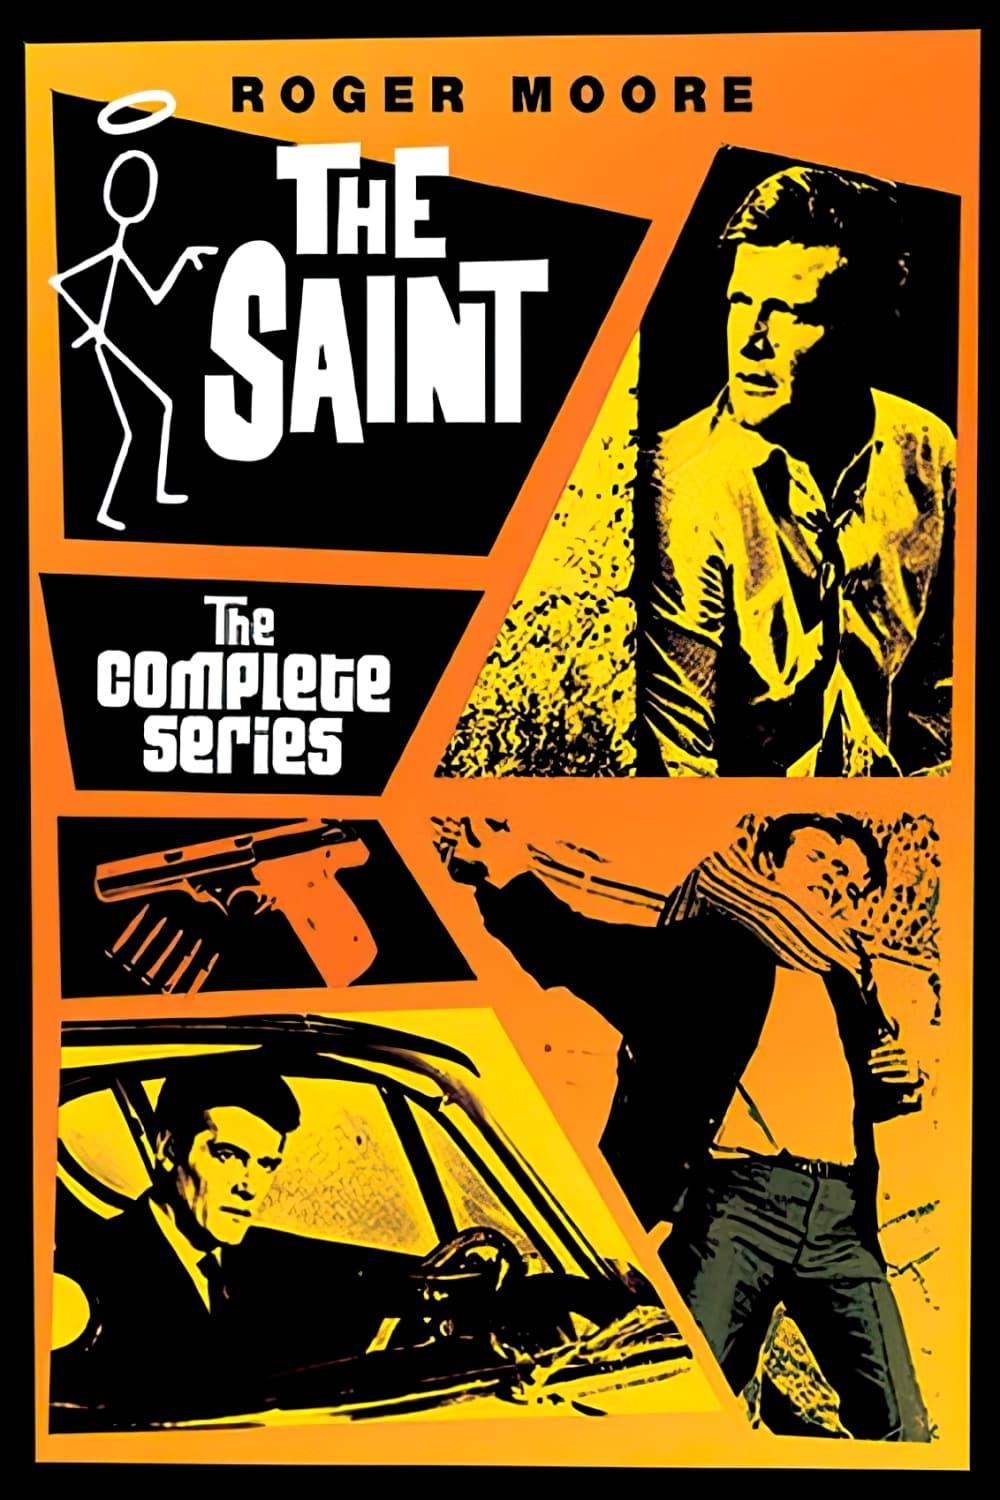 The Saint poster